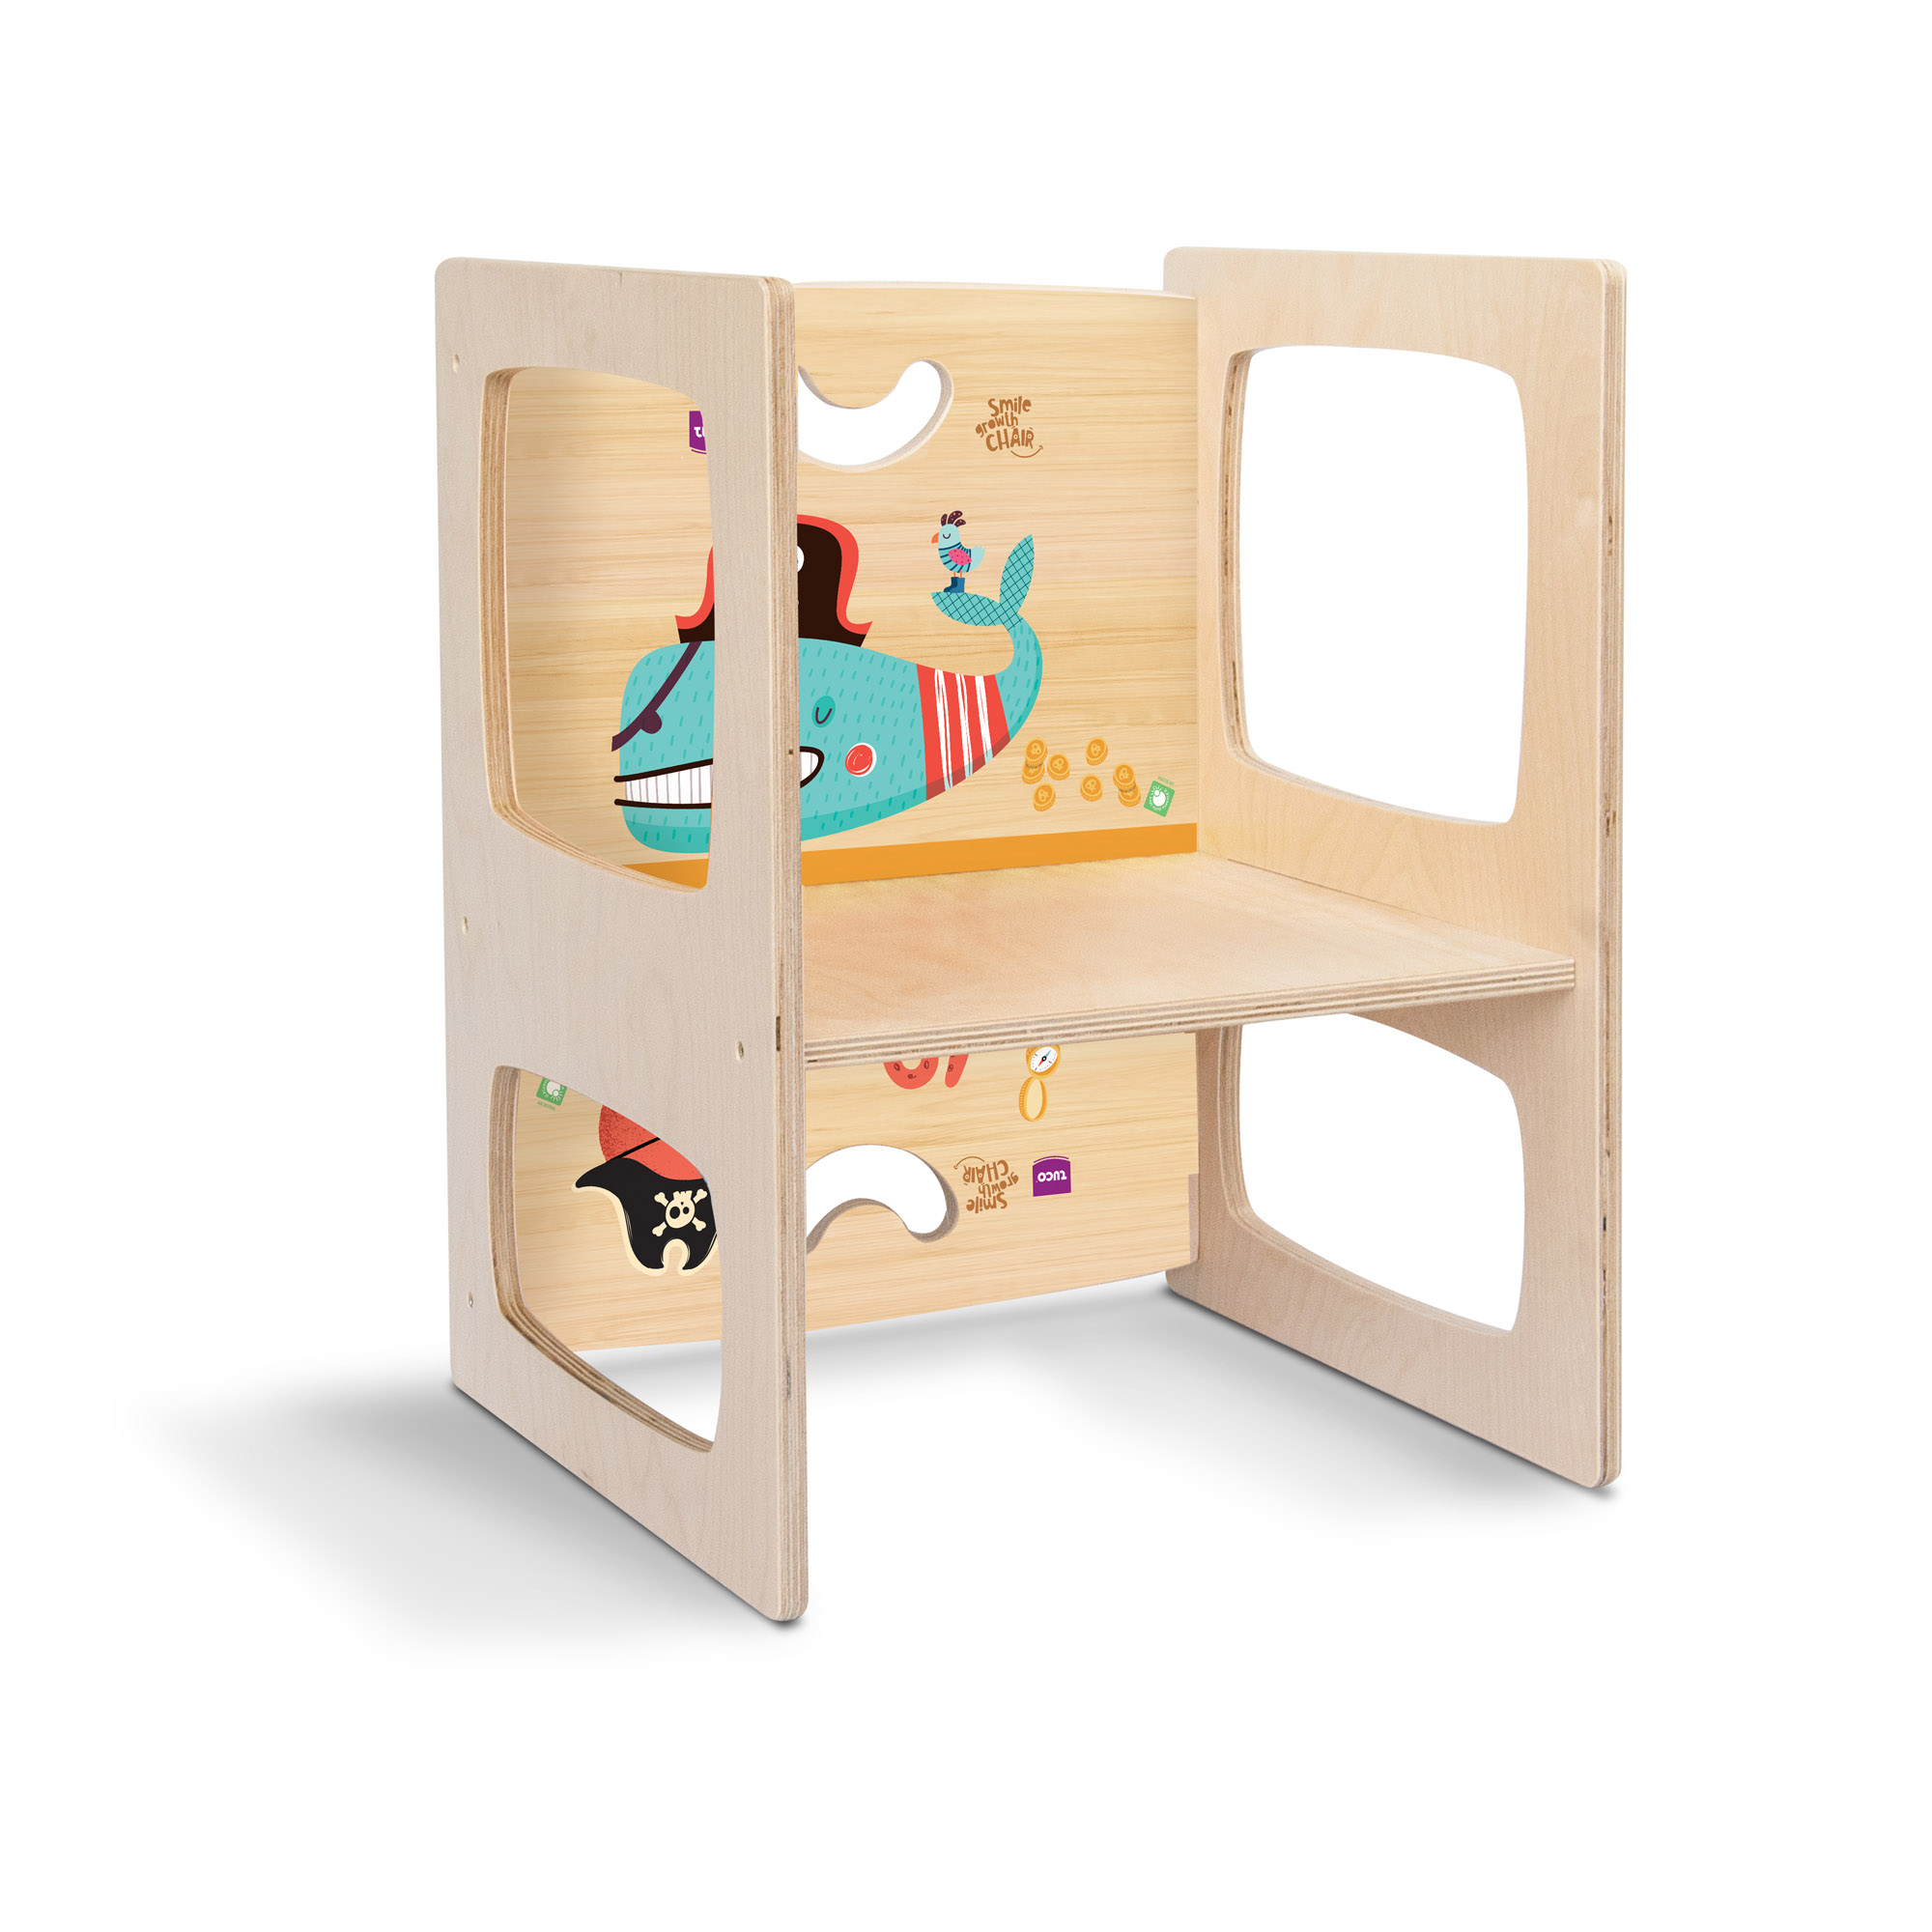 montessori chair, wooden Montessori chair for children, colored and printed